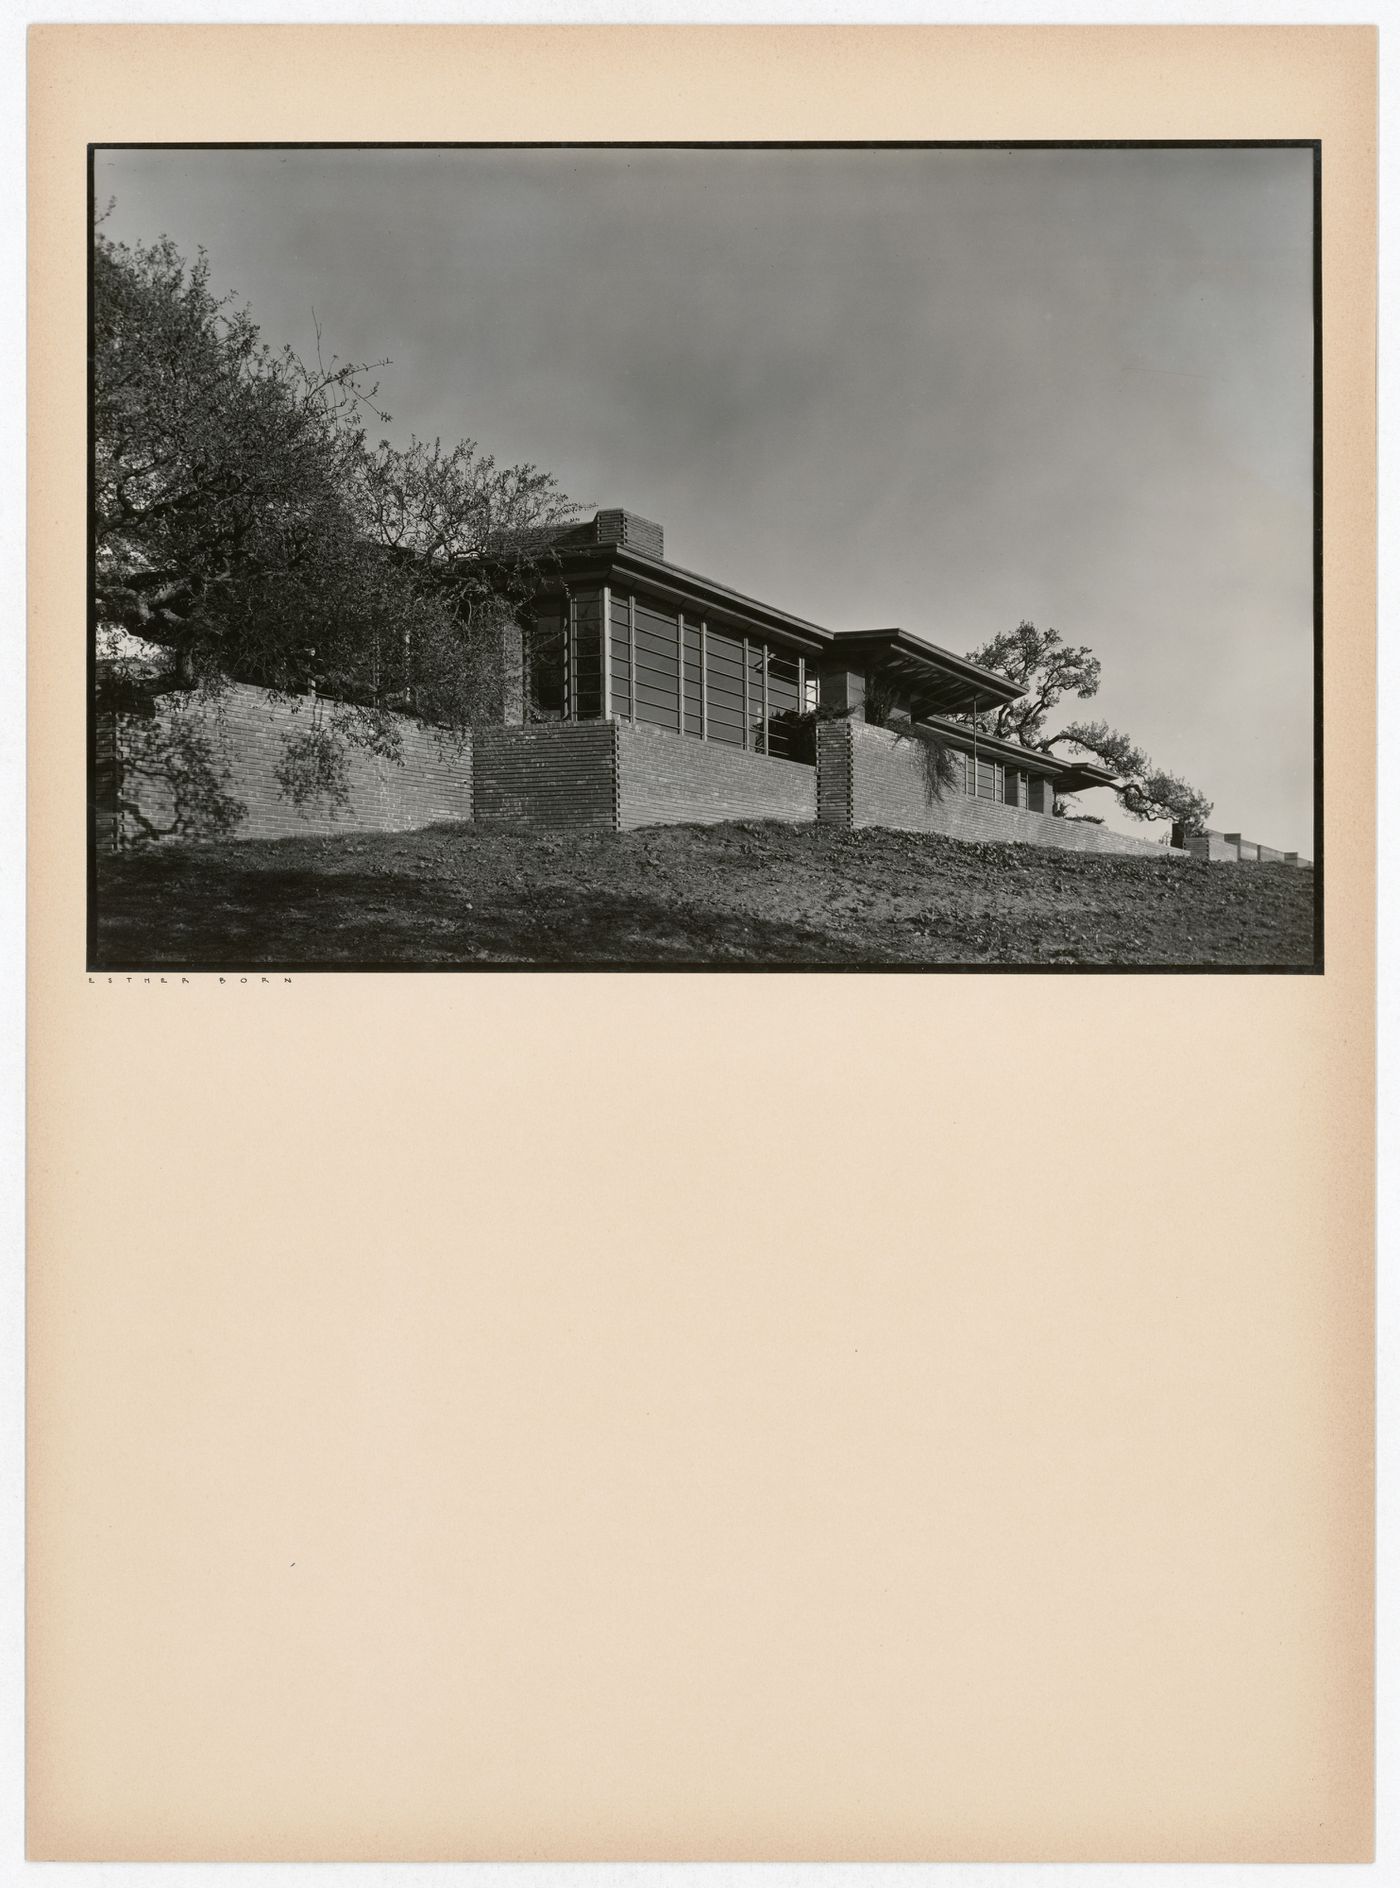 View of the Hanna House, Palo Alto, California, United States